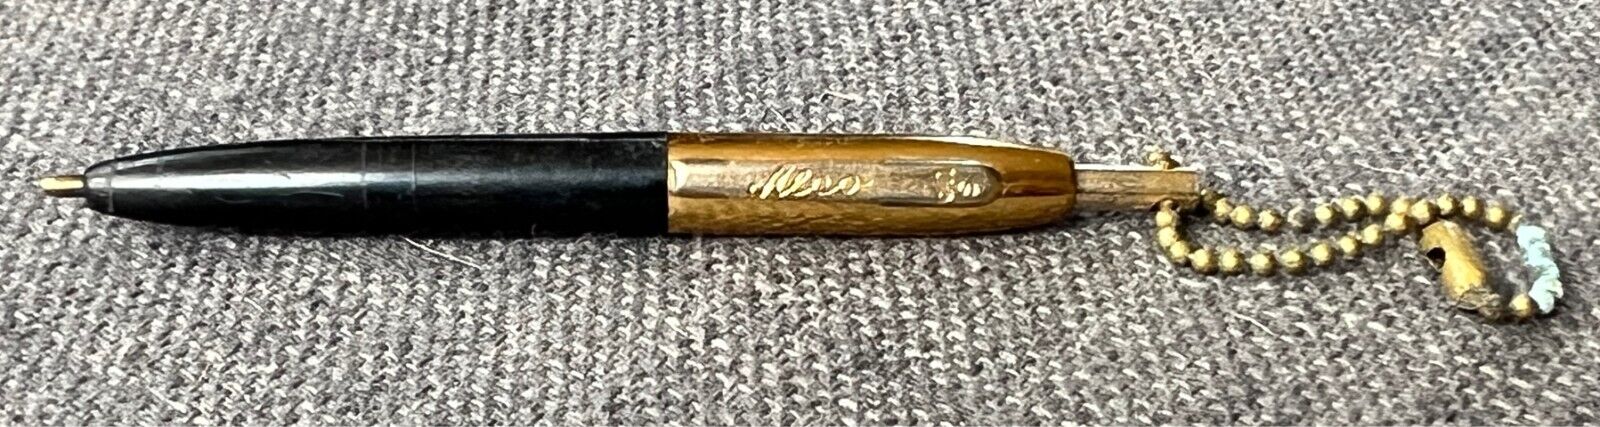 Vintage ALCO USA Black and Gold Colored Mini Keychain Pen